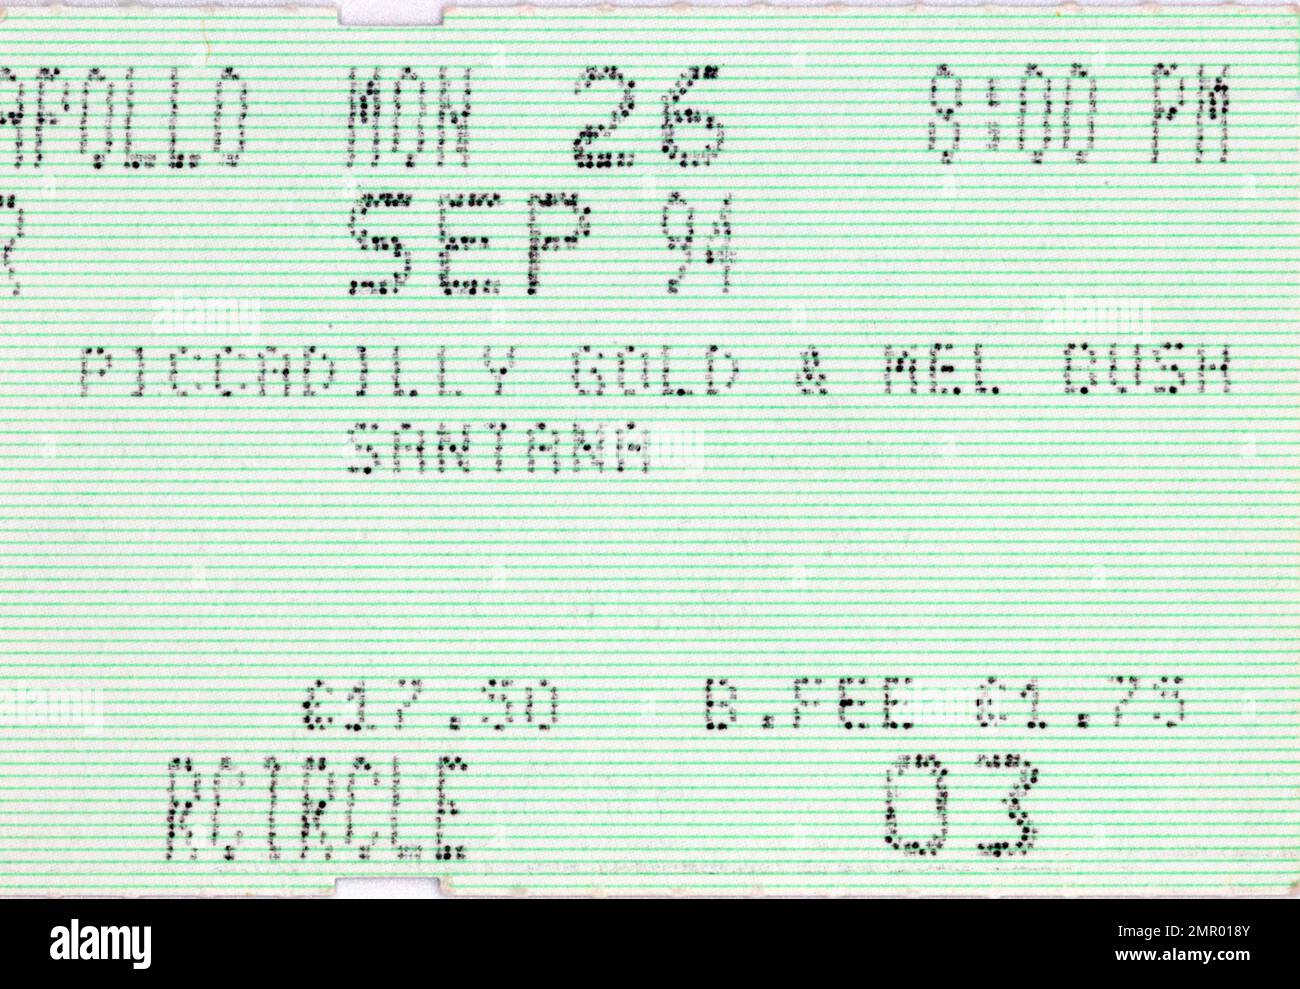 Santana, 26 September 1994, Concert Ticket Stubs, Music Concert Memorabilia , Manchester, England, UK Stock Photo